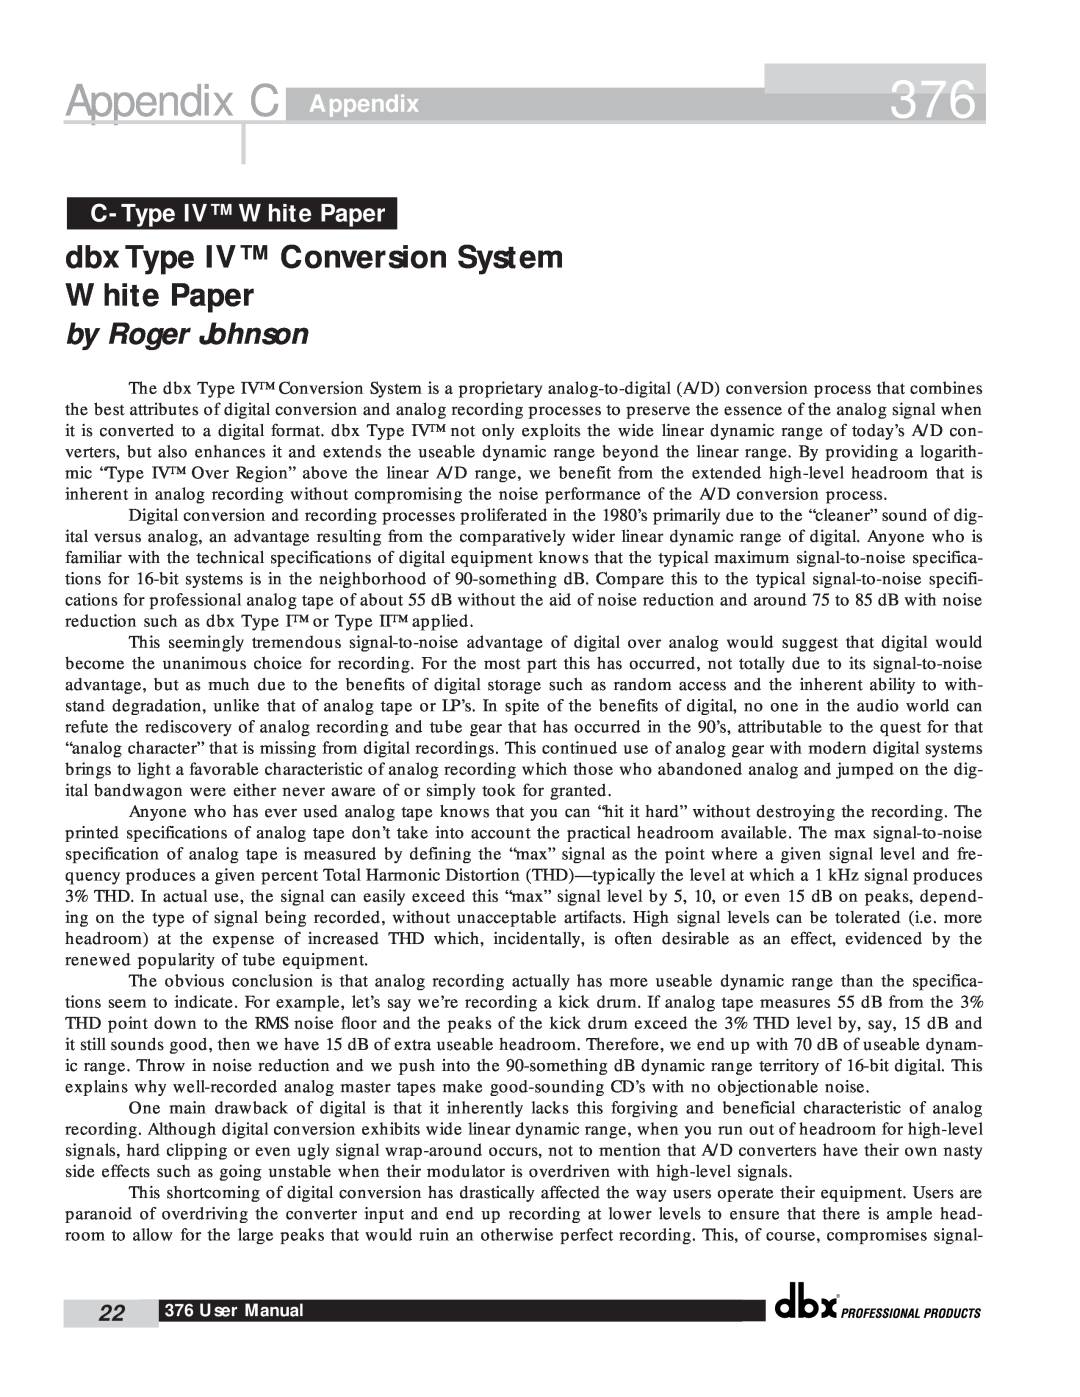 dbx Pro 376 user manual Appendix C, dbx Type IV Conversion System White Paper, C- Type IV White Paper, by Roger Johnson 